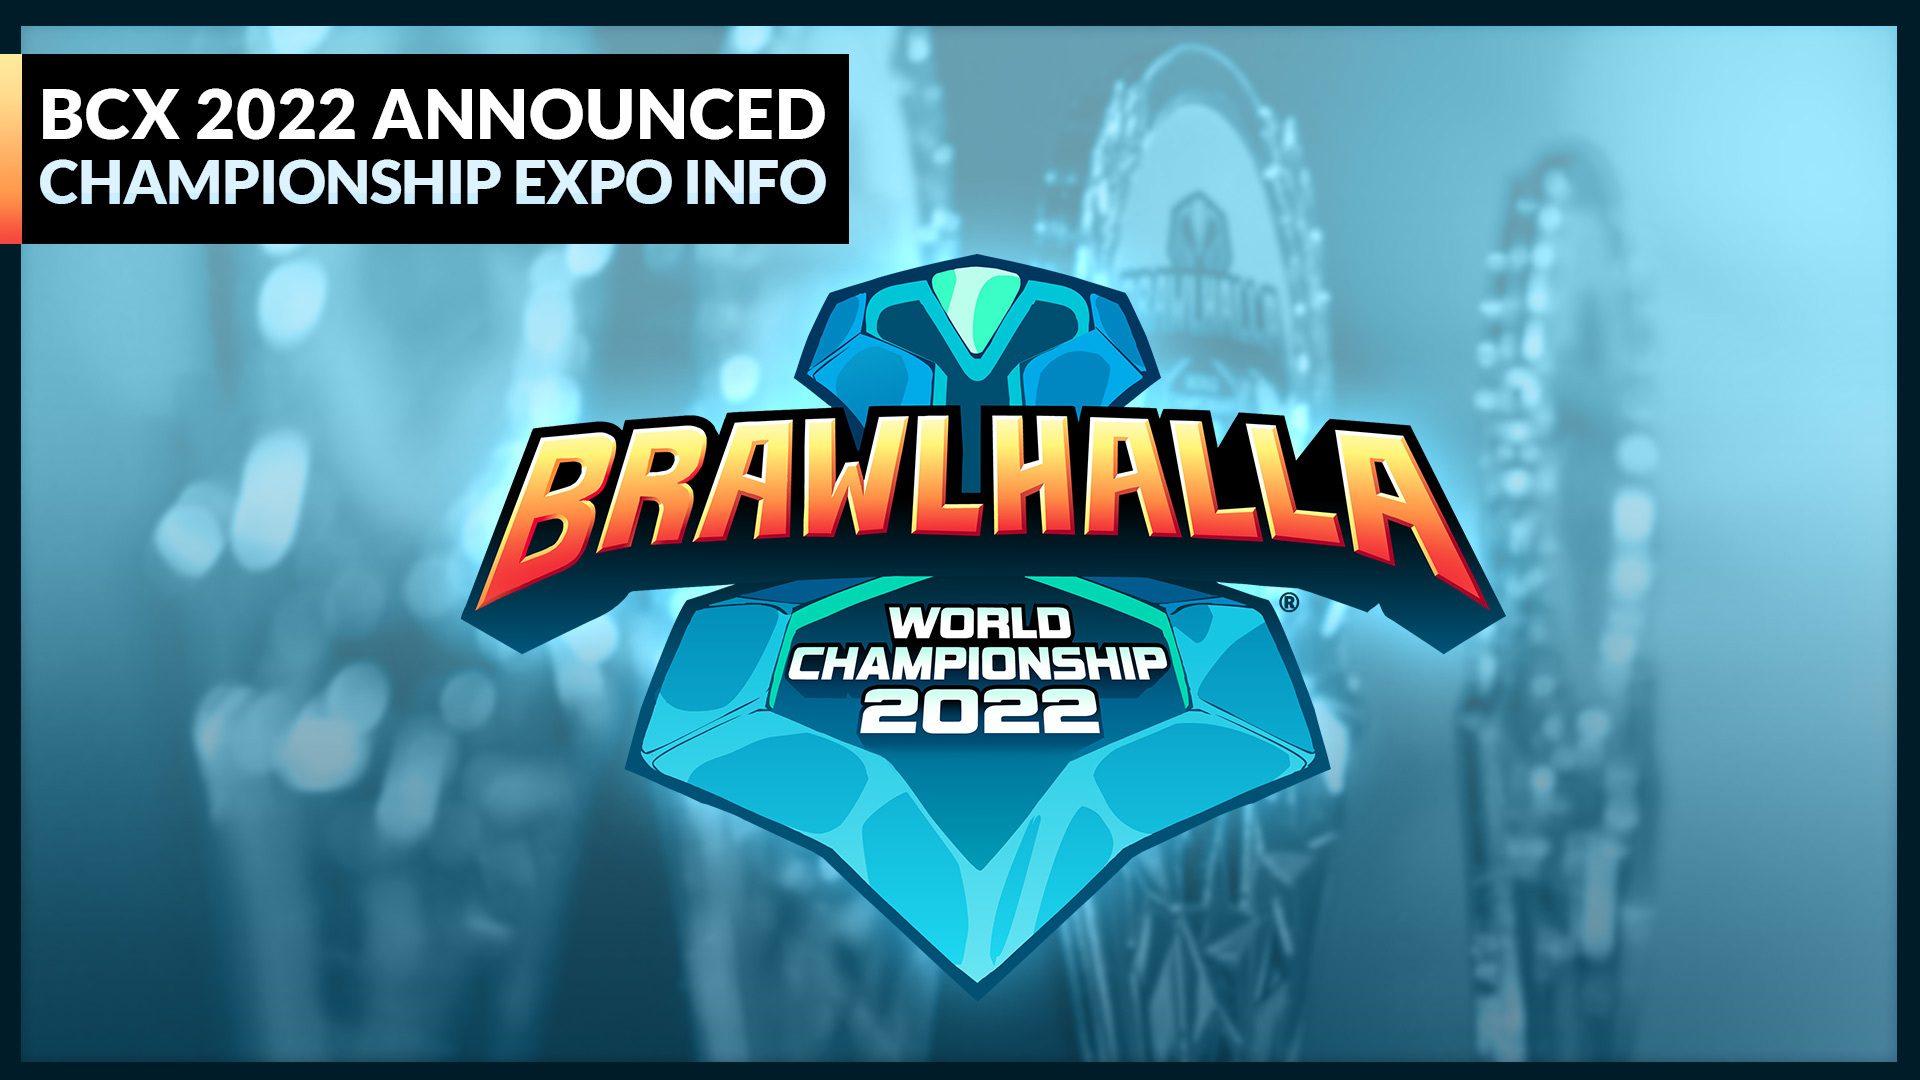 Announcing the Brawlhalla World Championship 2022